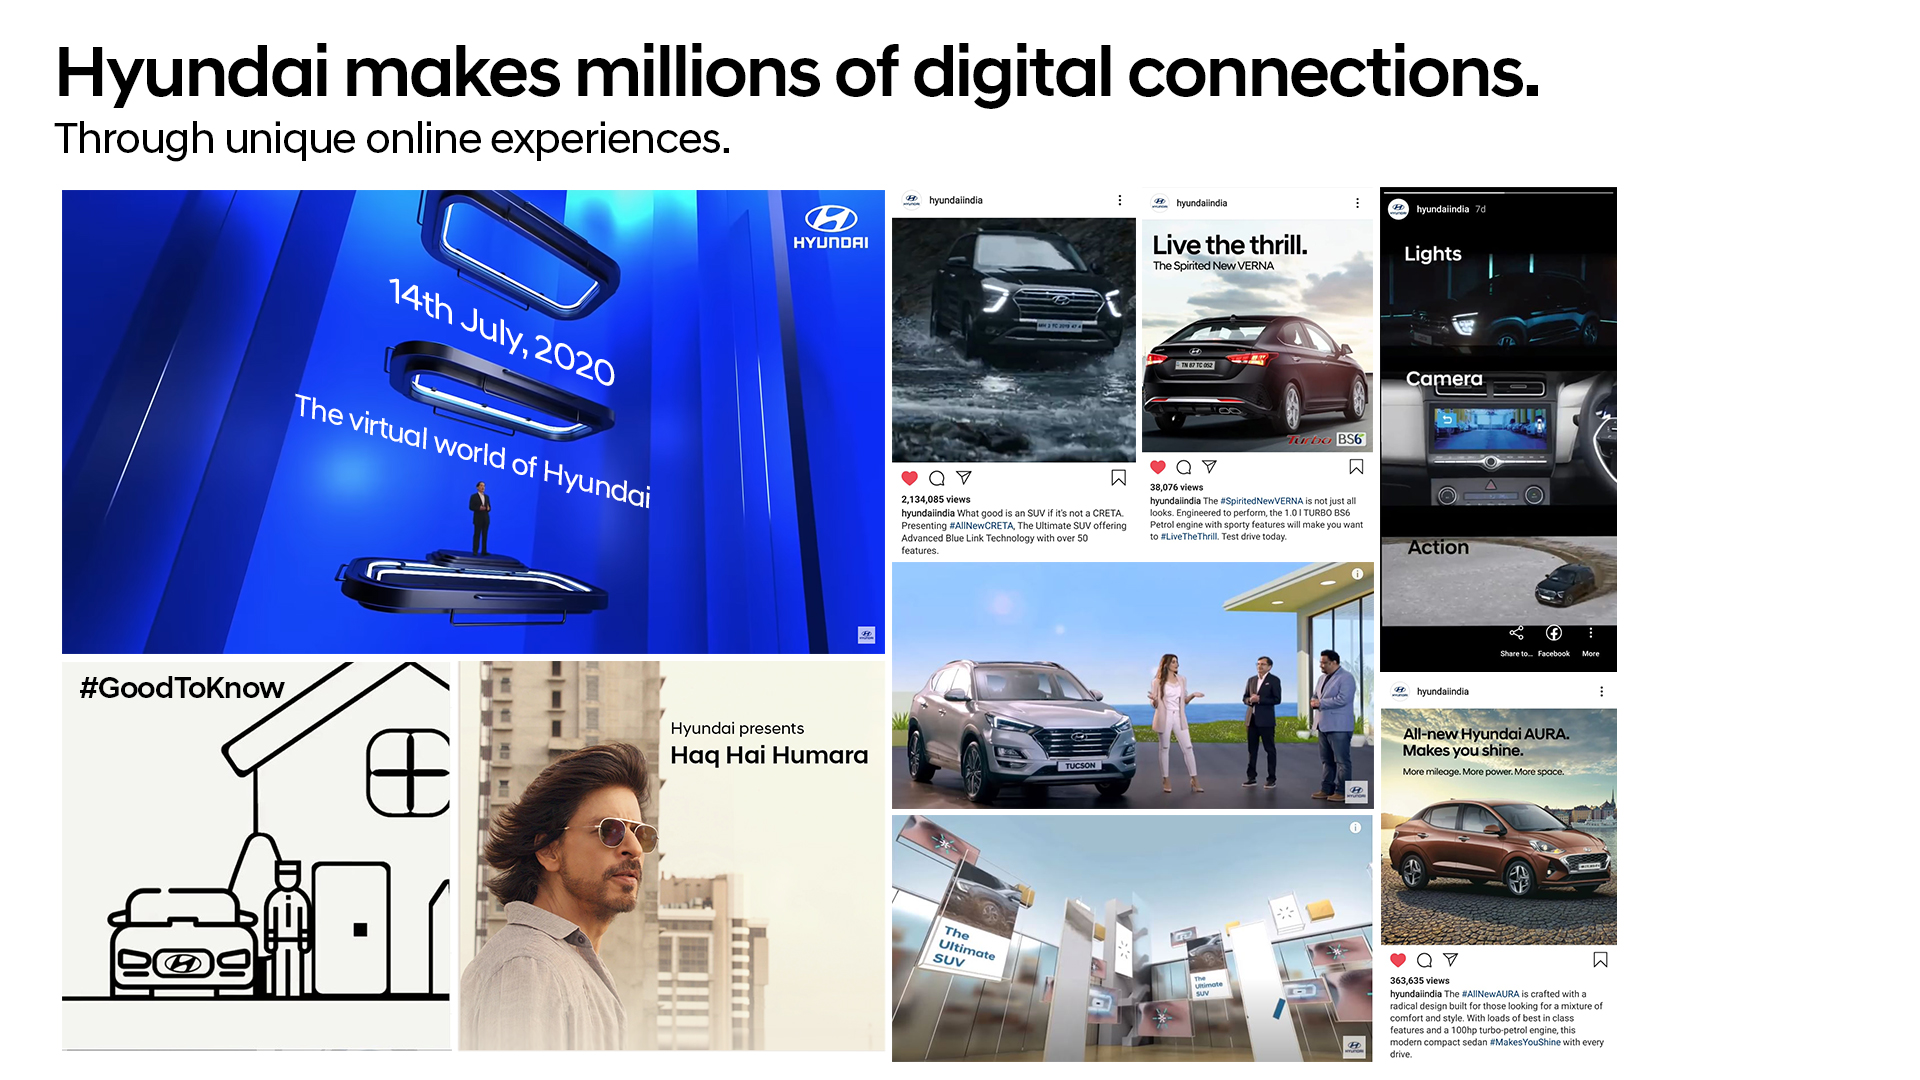 Hyundai Digital Connections